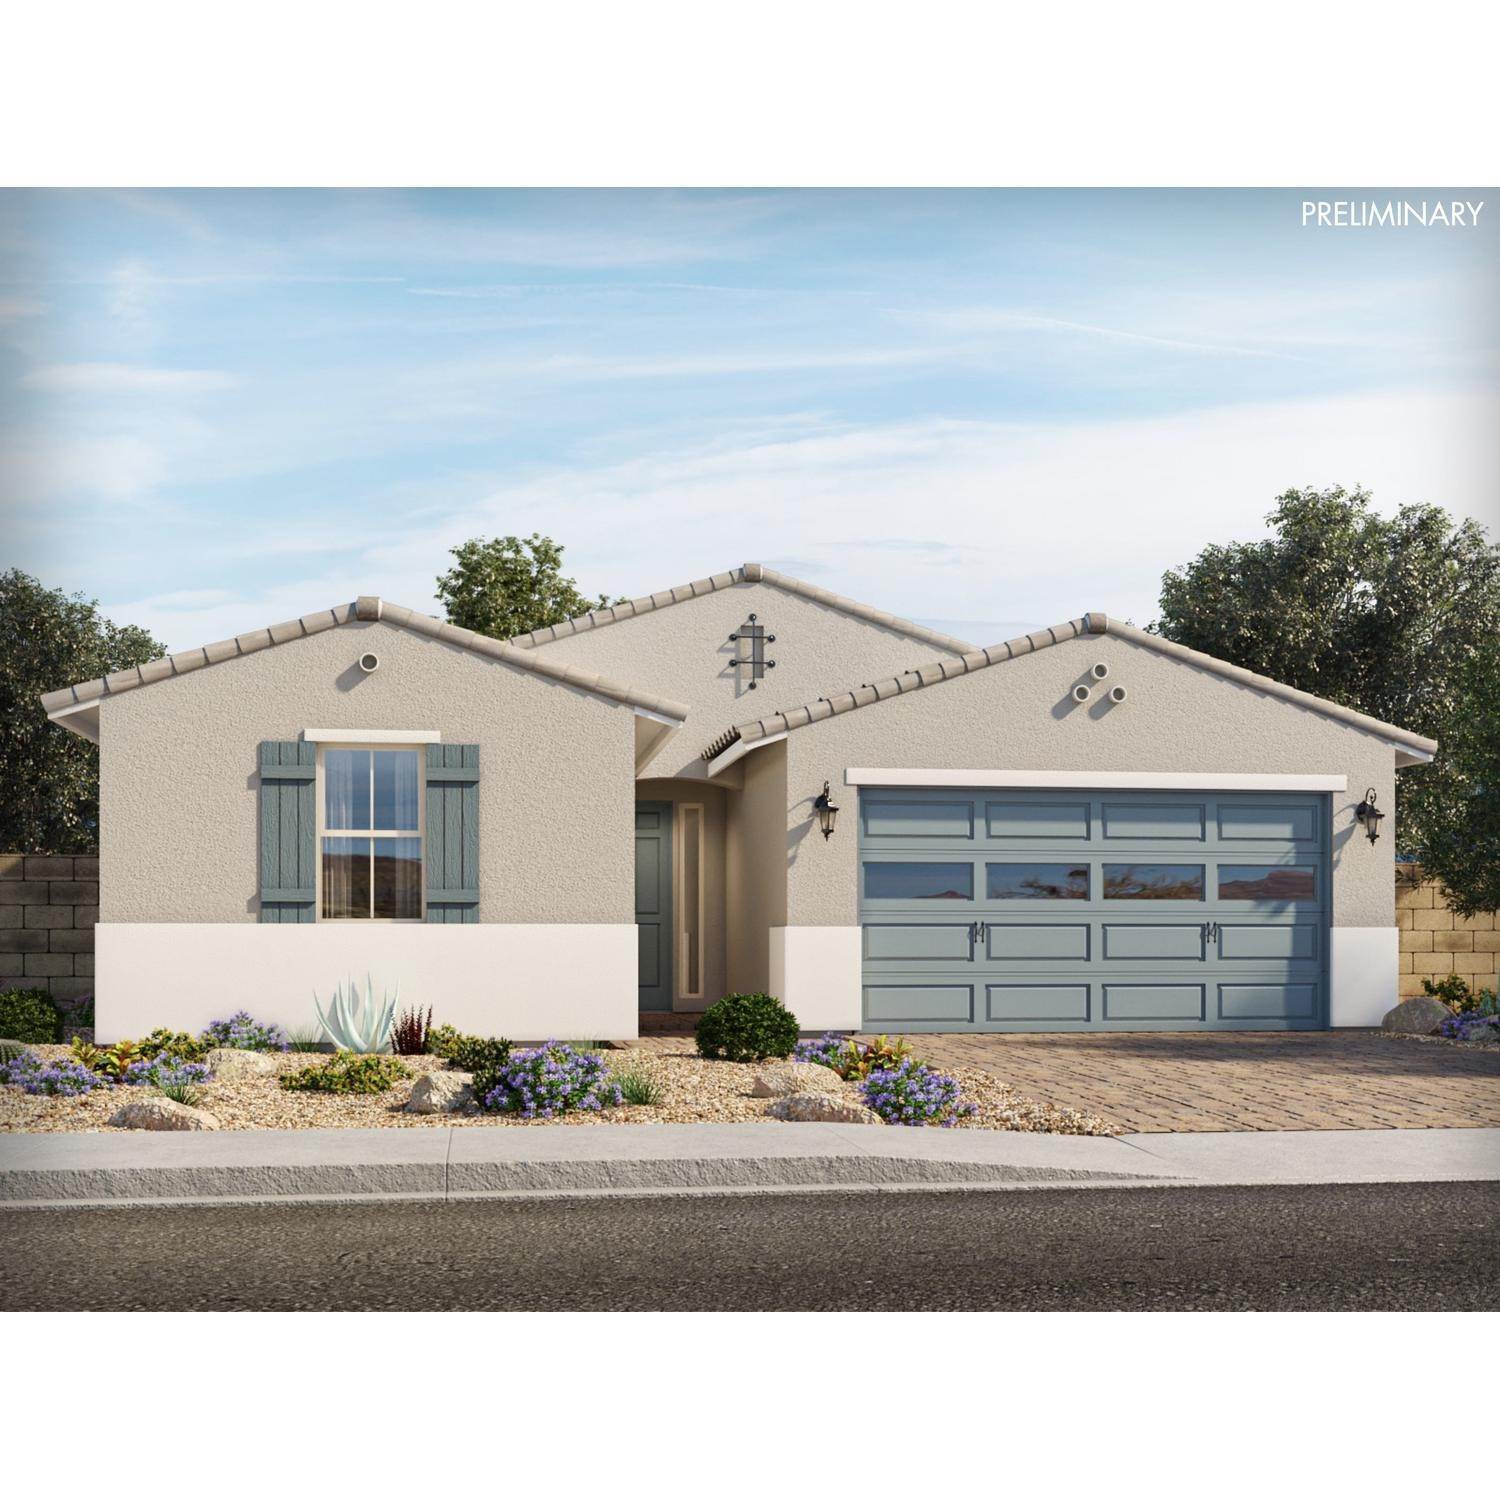 Single Family for Sale at Coyote Ridge - Estate Series 22474 W Yavapai Street, Buckeye, AZ 85326